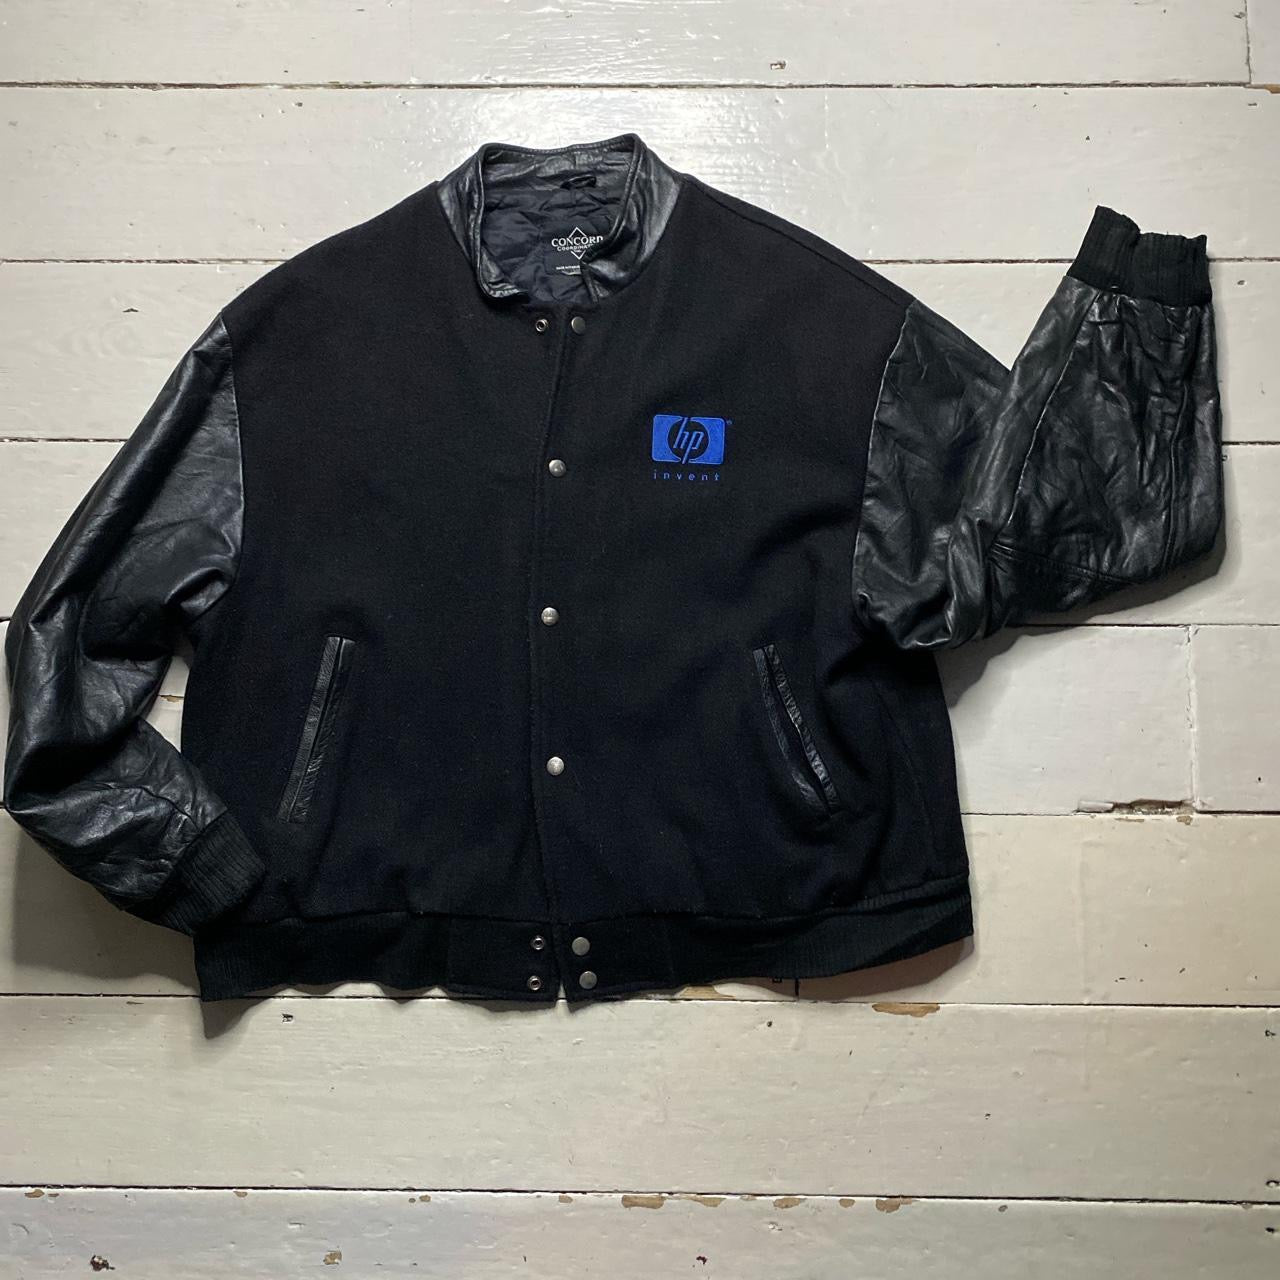 HP Computers Vintage Leather Jacket (Large)